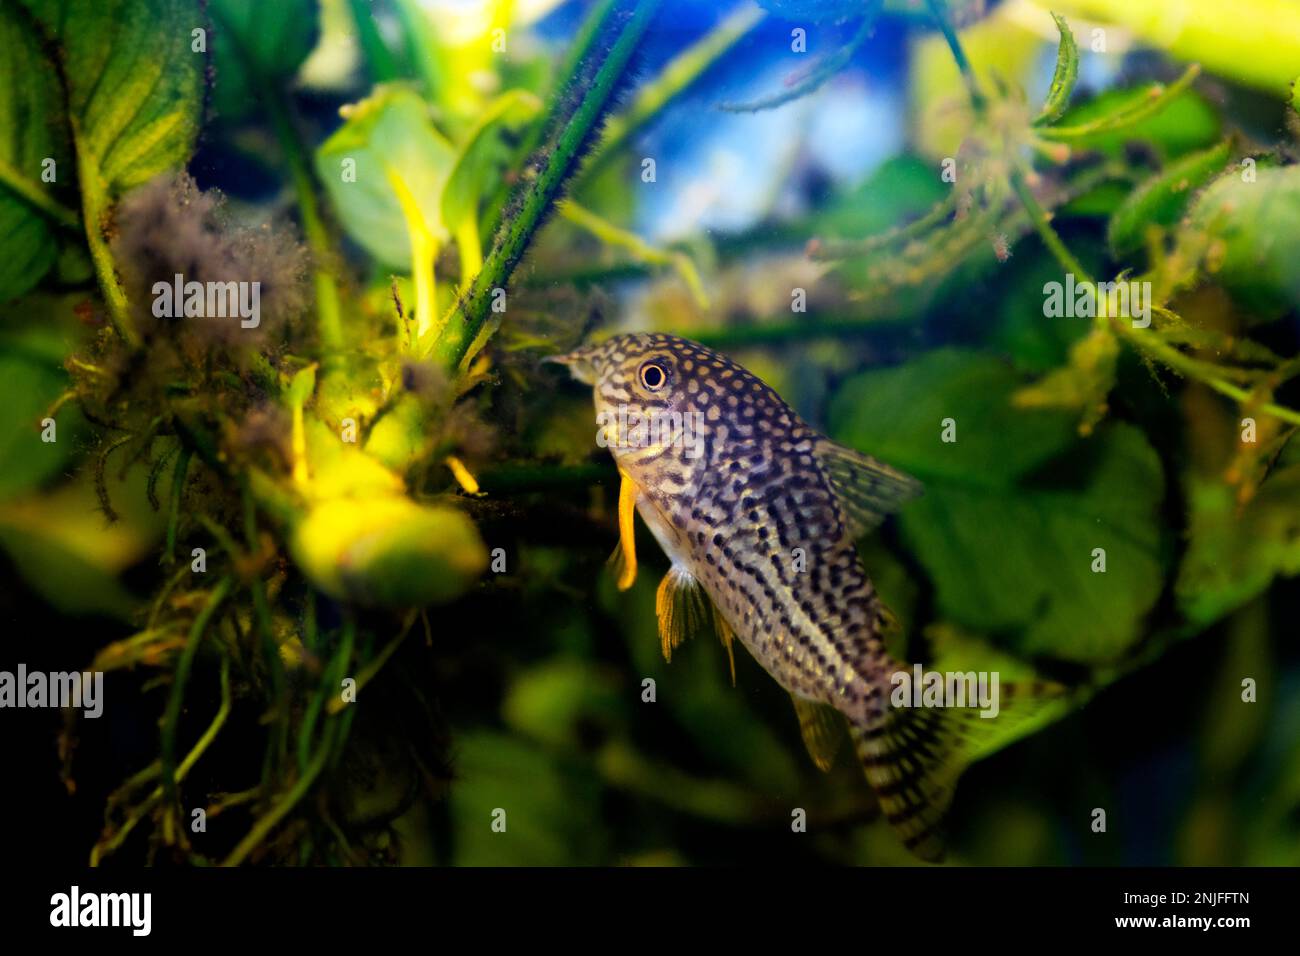 Corydoras sterbai - Sterba's Cory fish Stock Photo